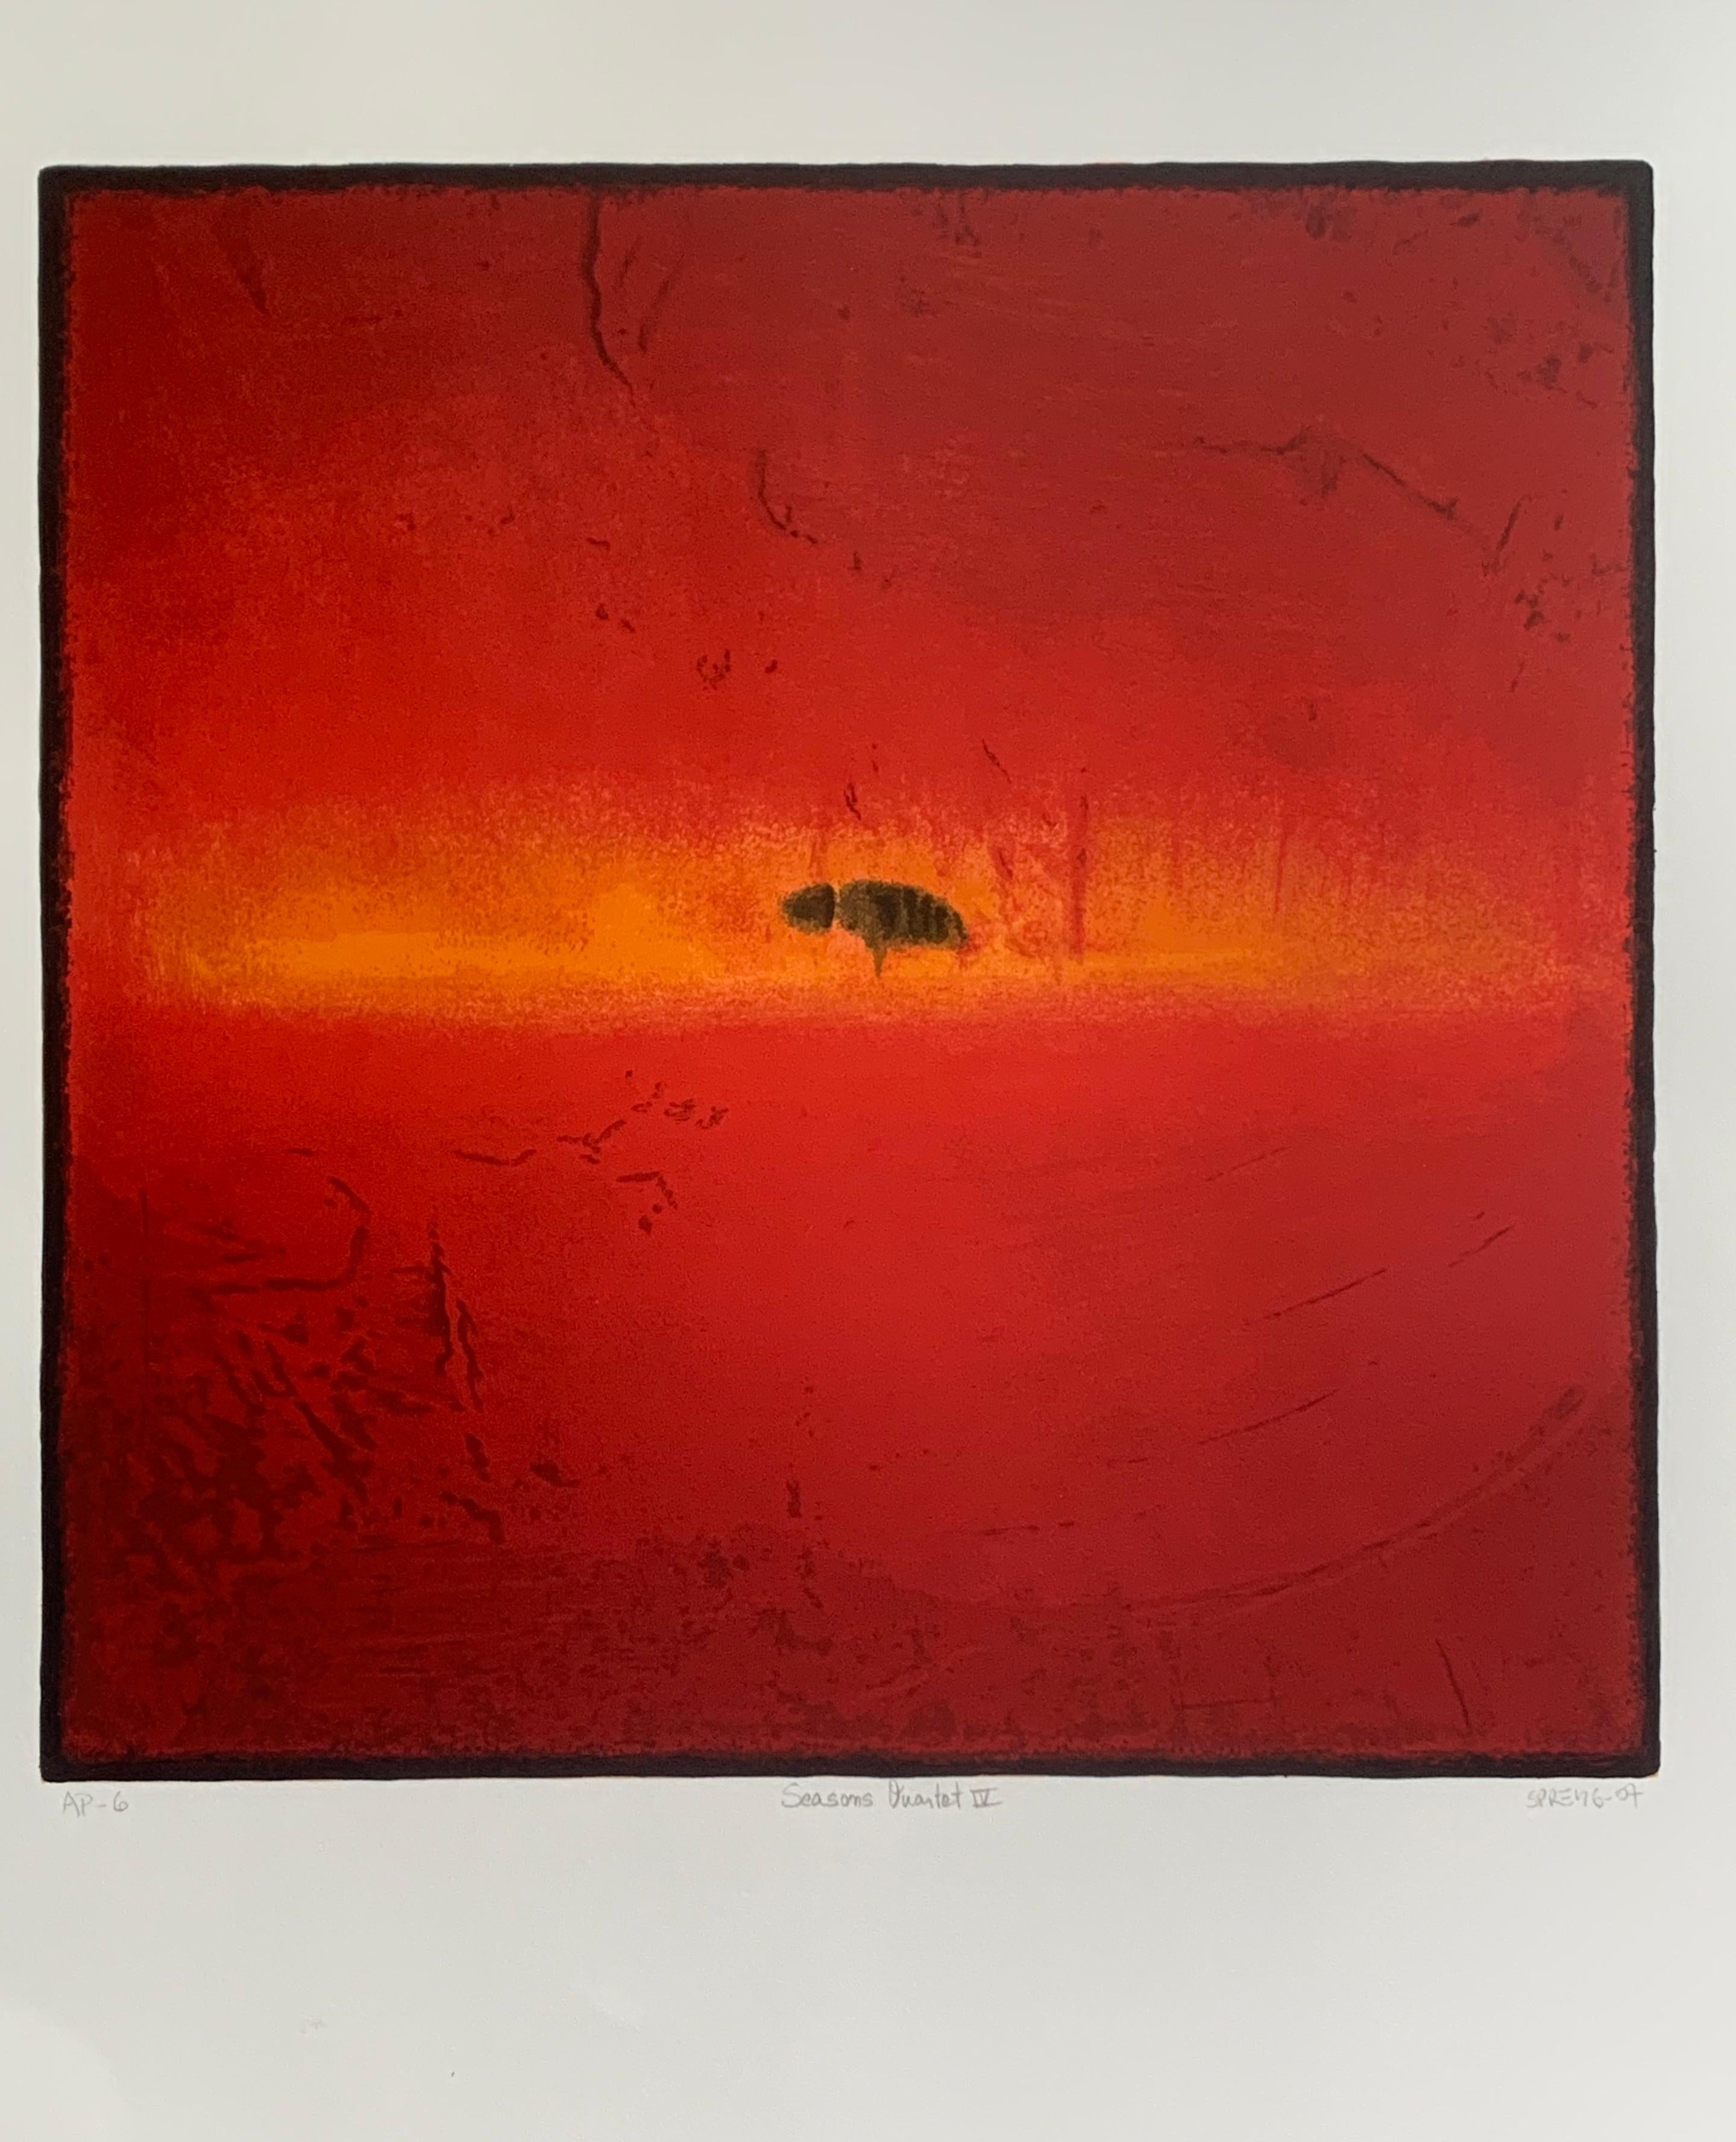 Sebastian Spreng Landscape Print - Seasons Quartet IV  Red Lithograph AP 6